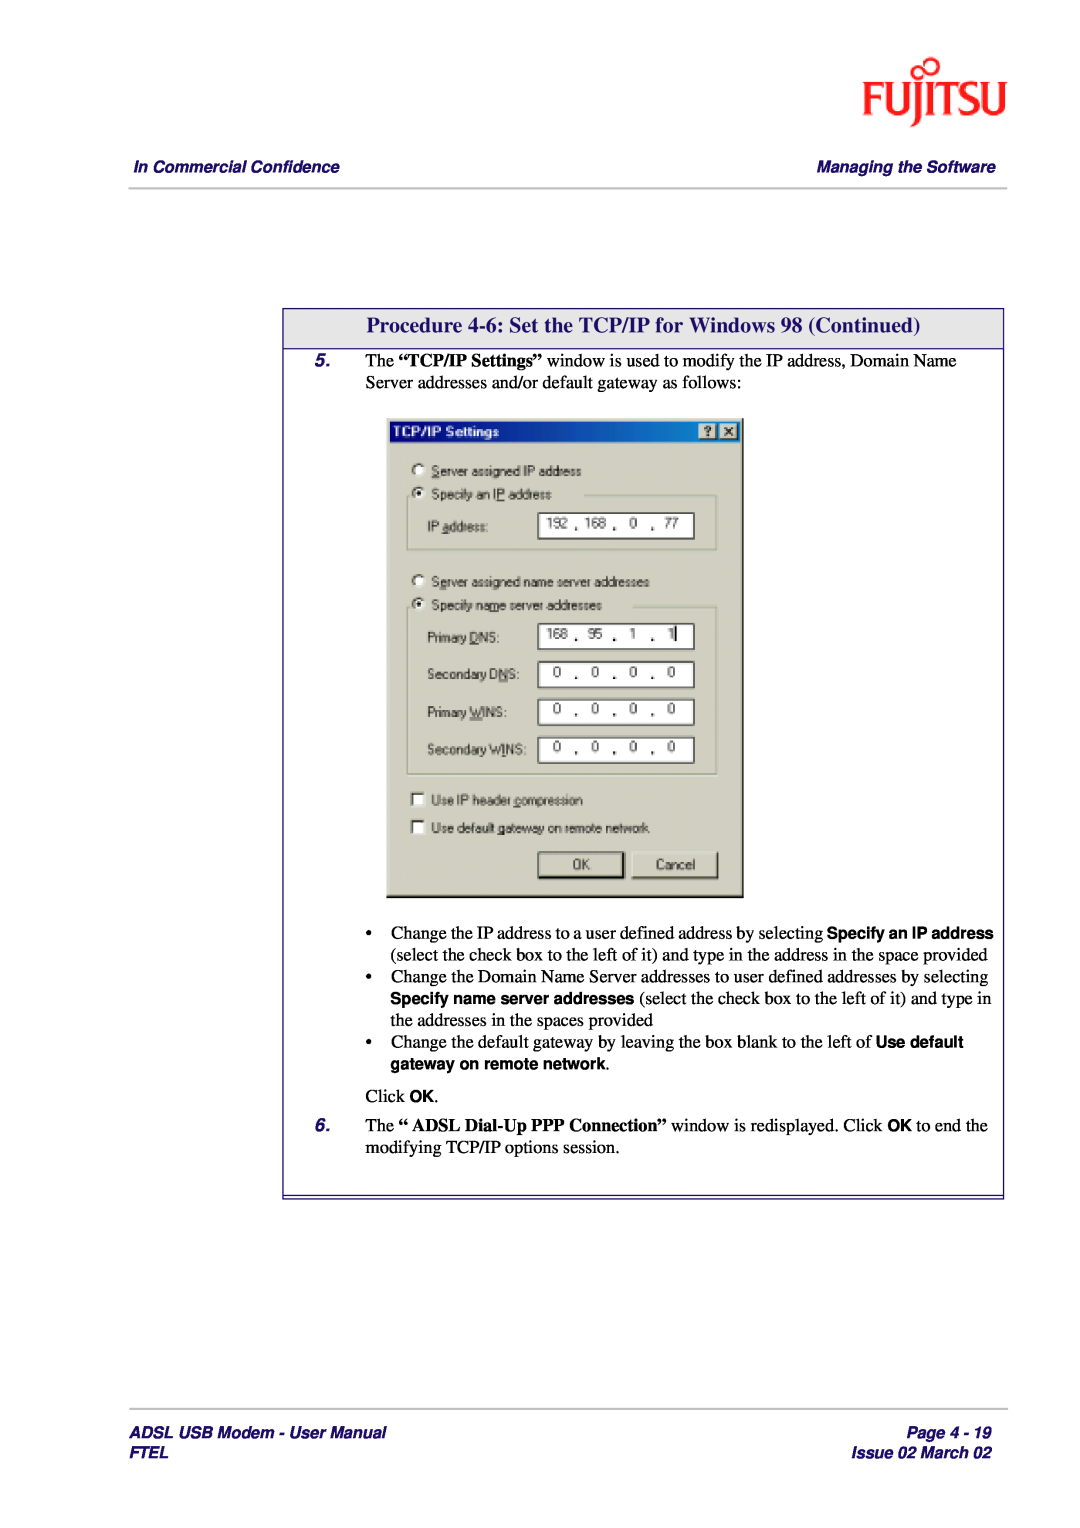 Fujitsu 3XAX-00803AAS user manual Procedure 4-6 Set the TCP/IP for Windows 98 Continued, Click OK 